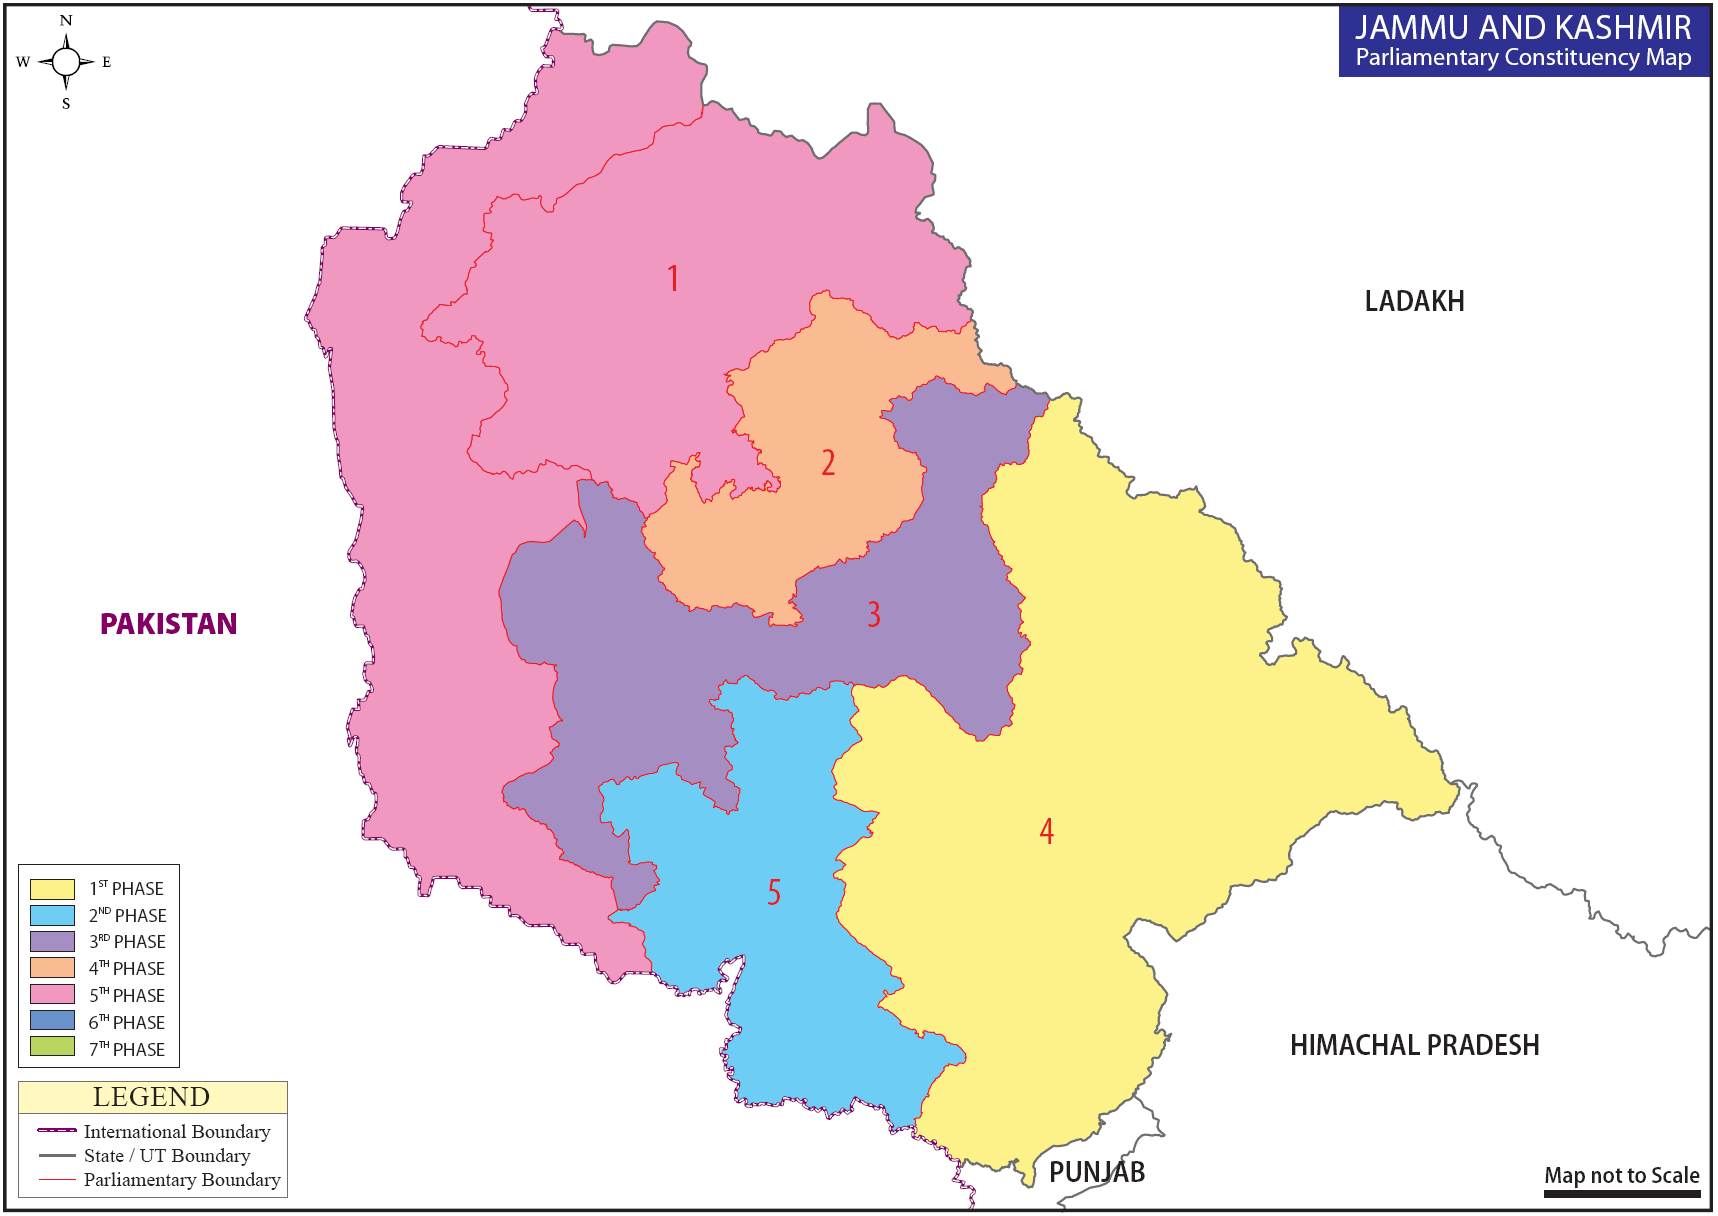 Jammu and Kashmir Parliamentary Constituency Map